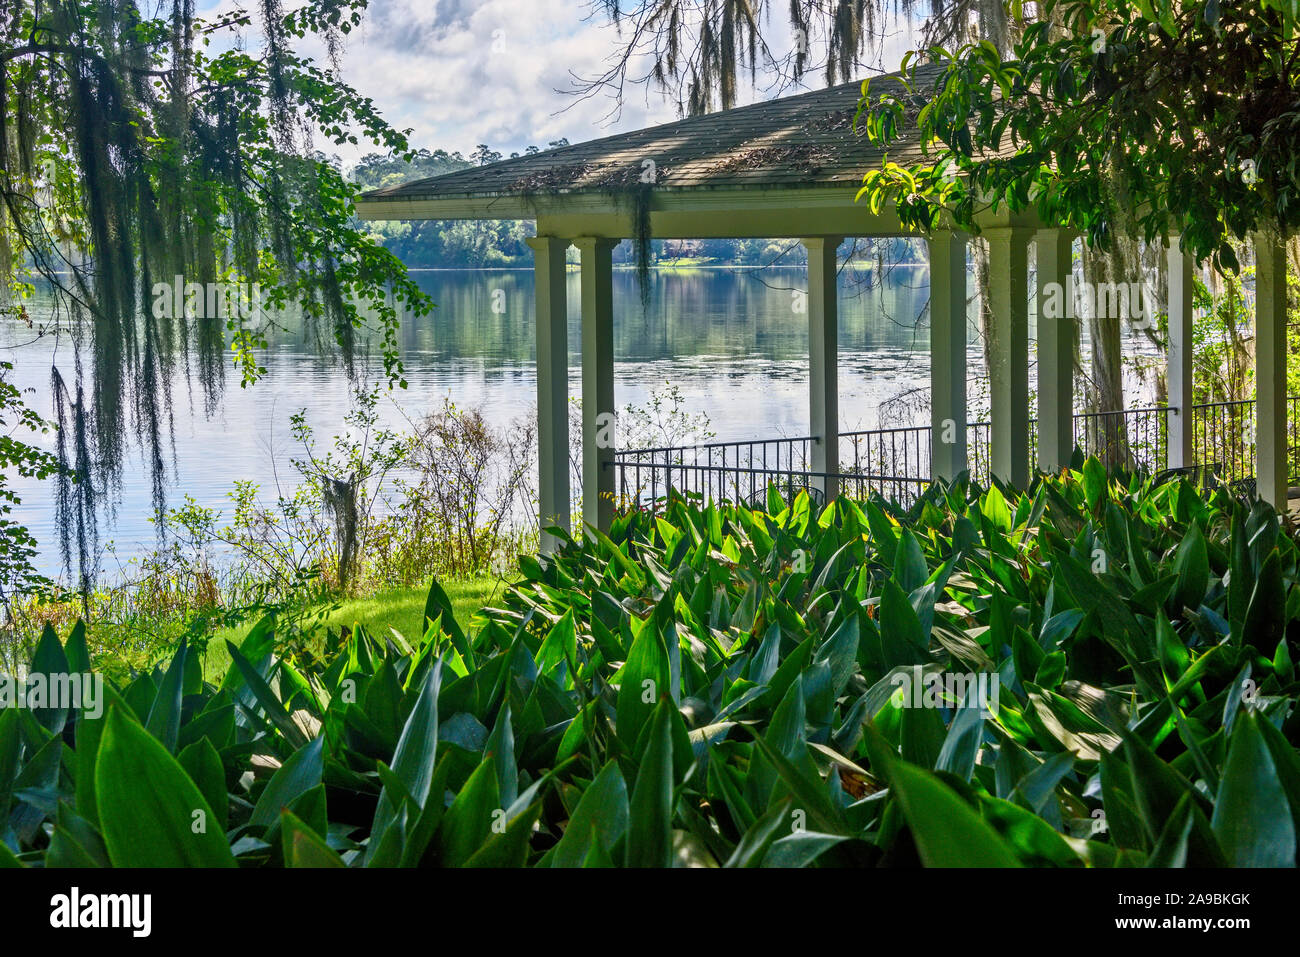 Tropical vegetation on lake with covered gazebo Stock Photo